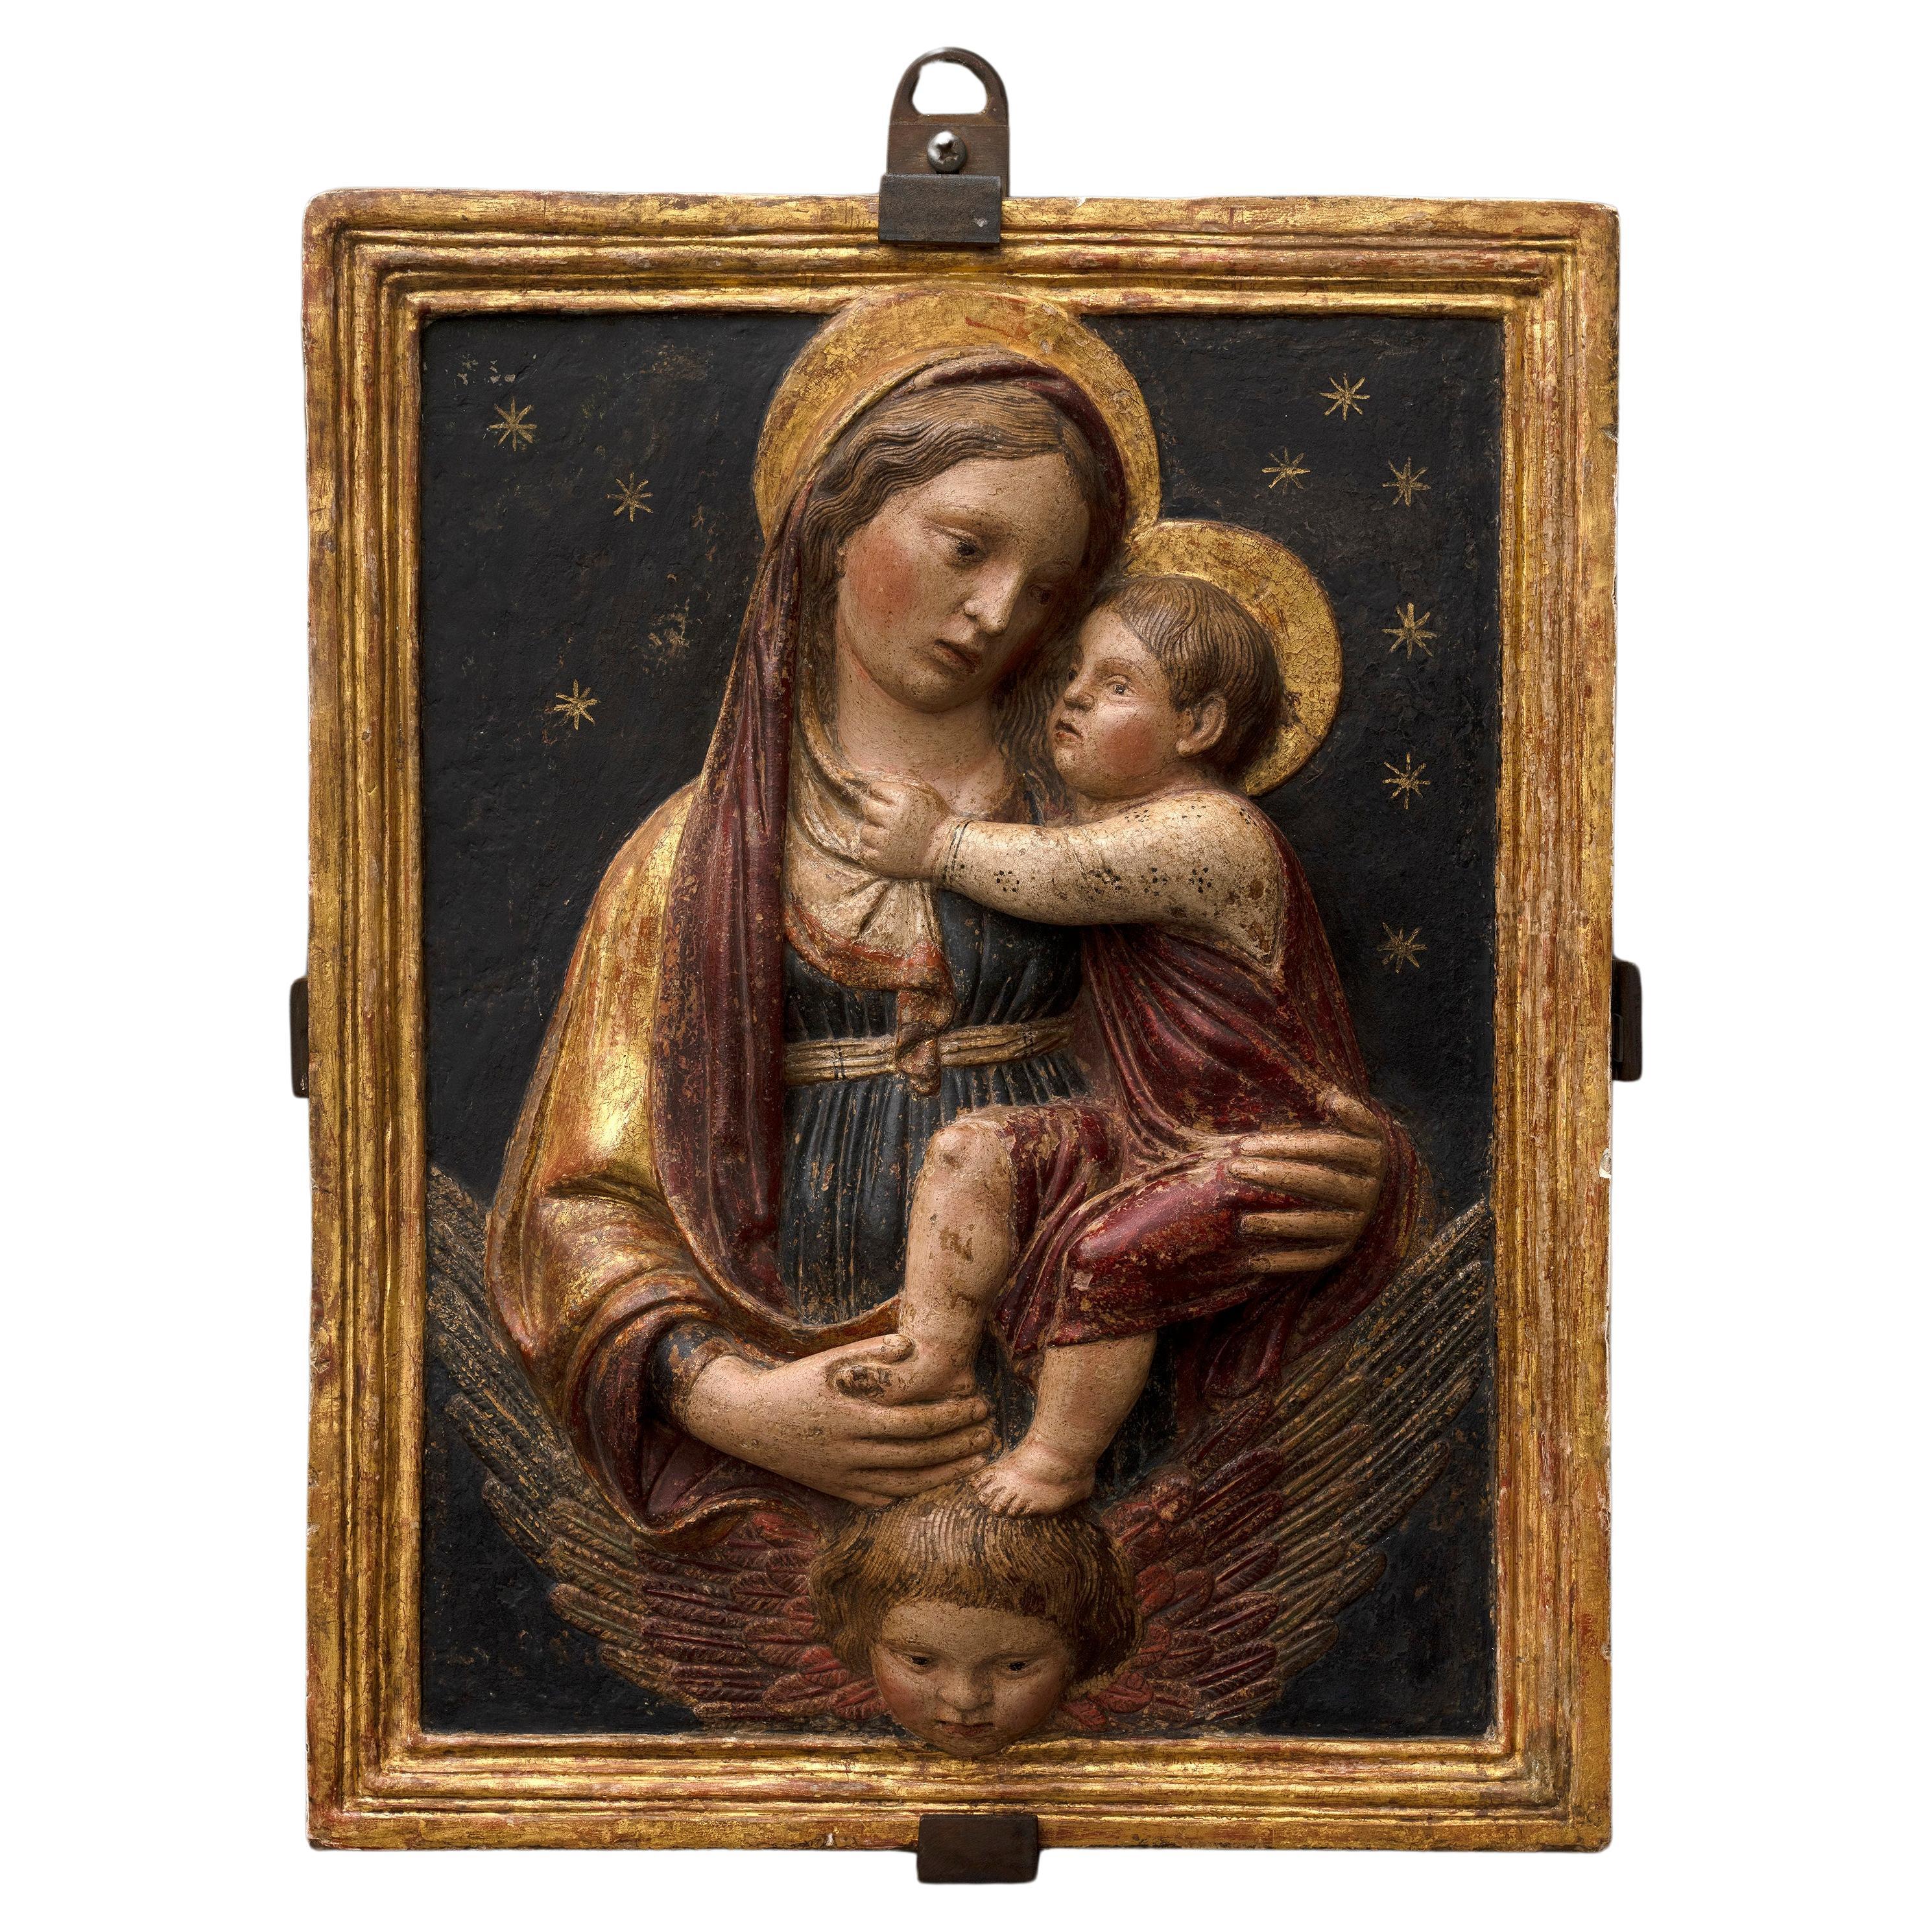 Attributed to Domenico di Paris - Madonna and The Child, 15th century